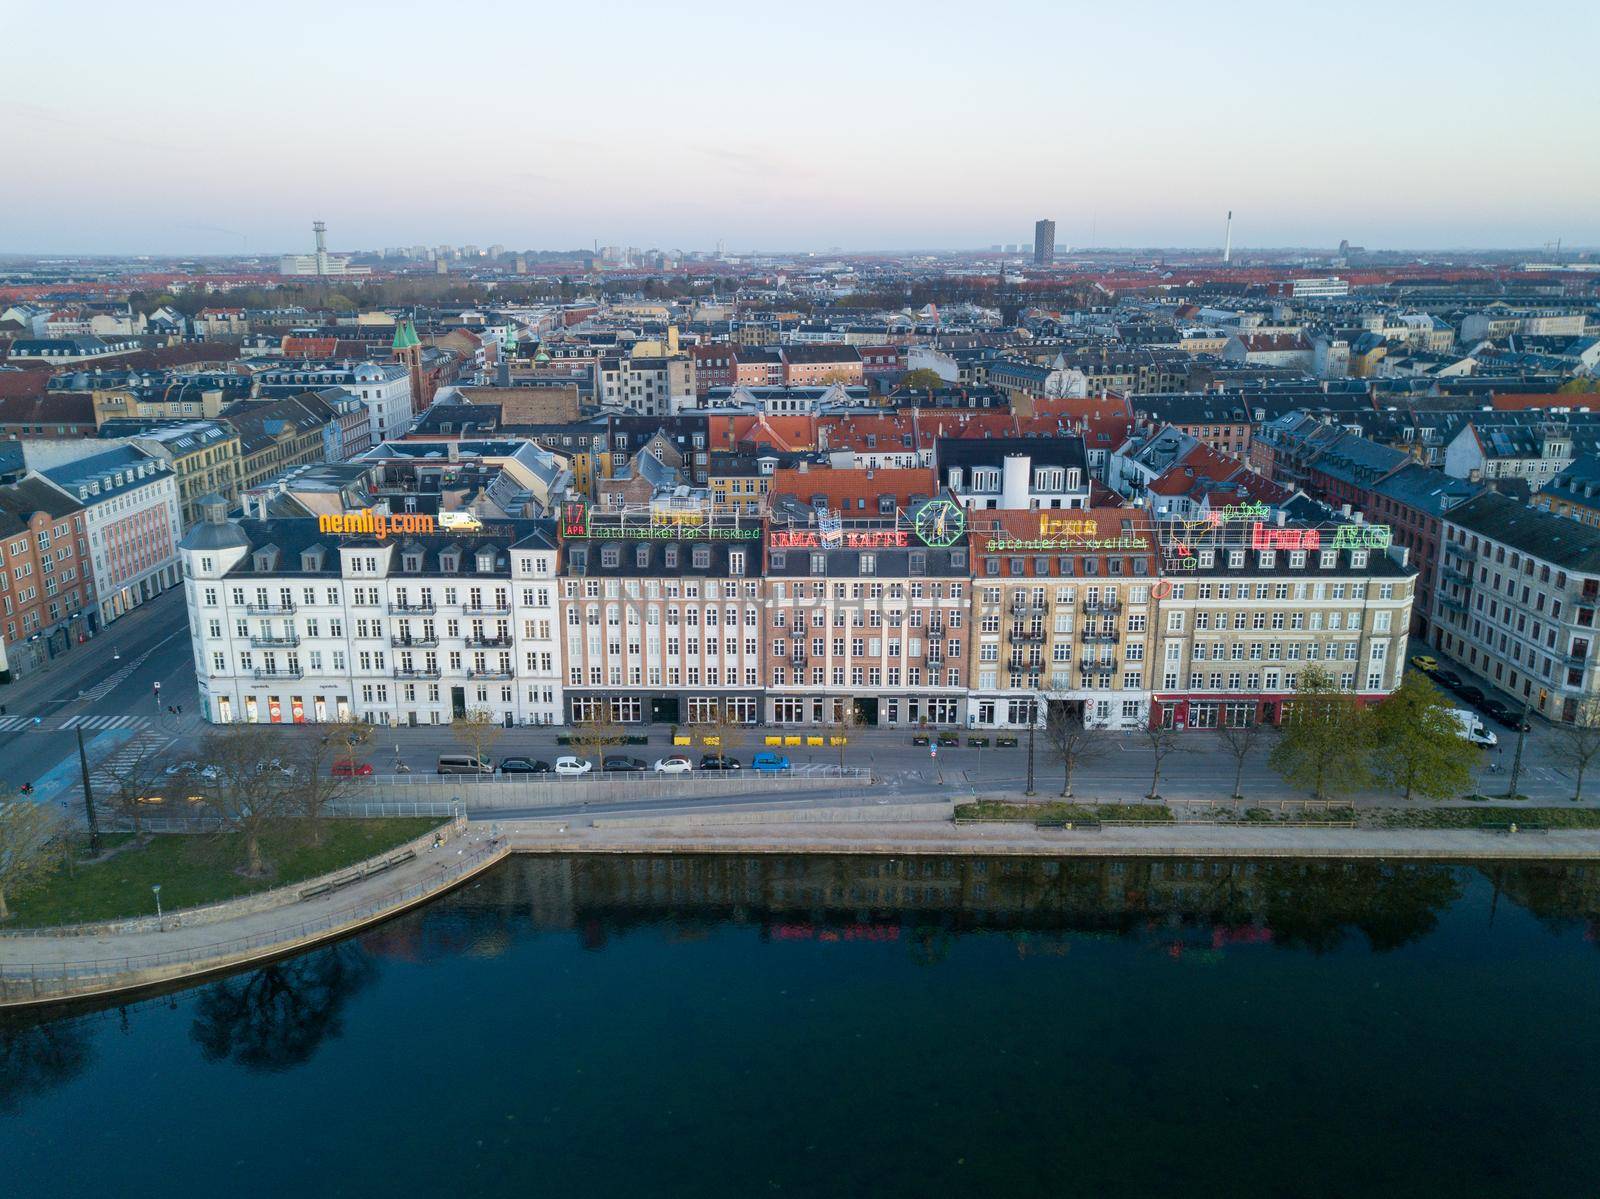 Copenhagen, Denmark - April 17, 2020: Aerial drone view of neon light advertisement billboards on buildings at night